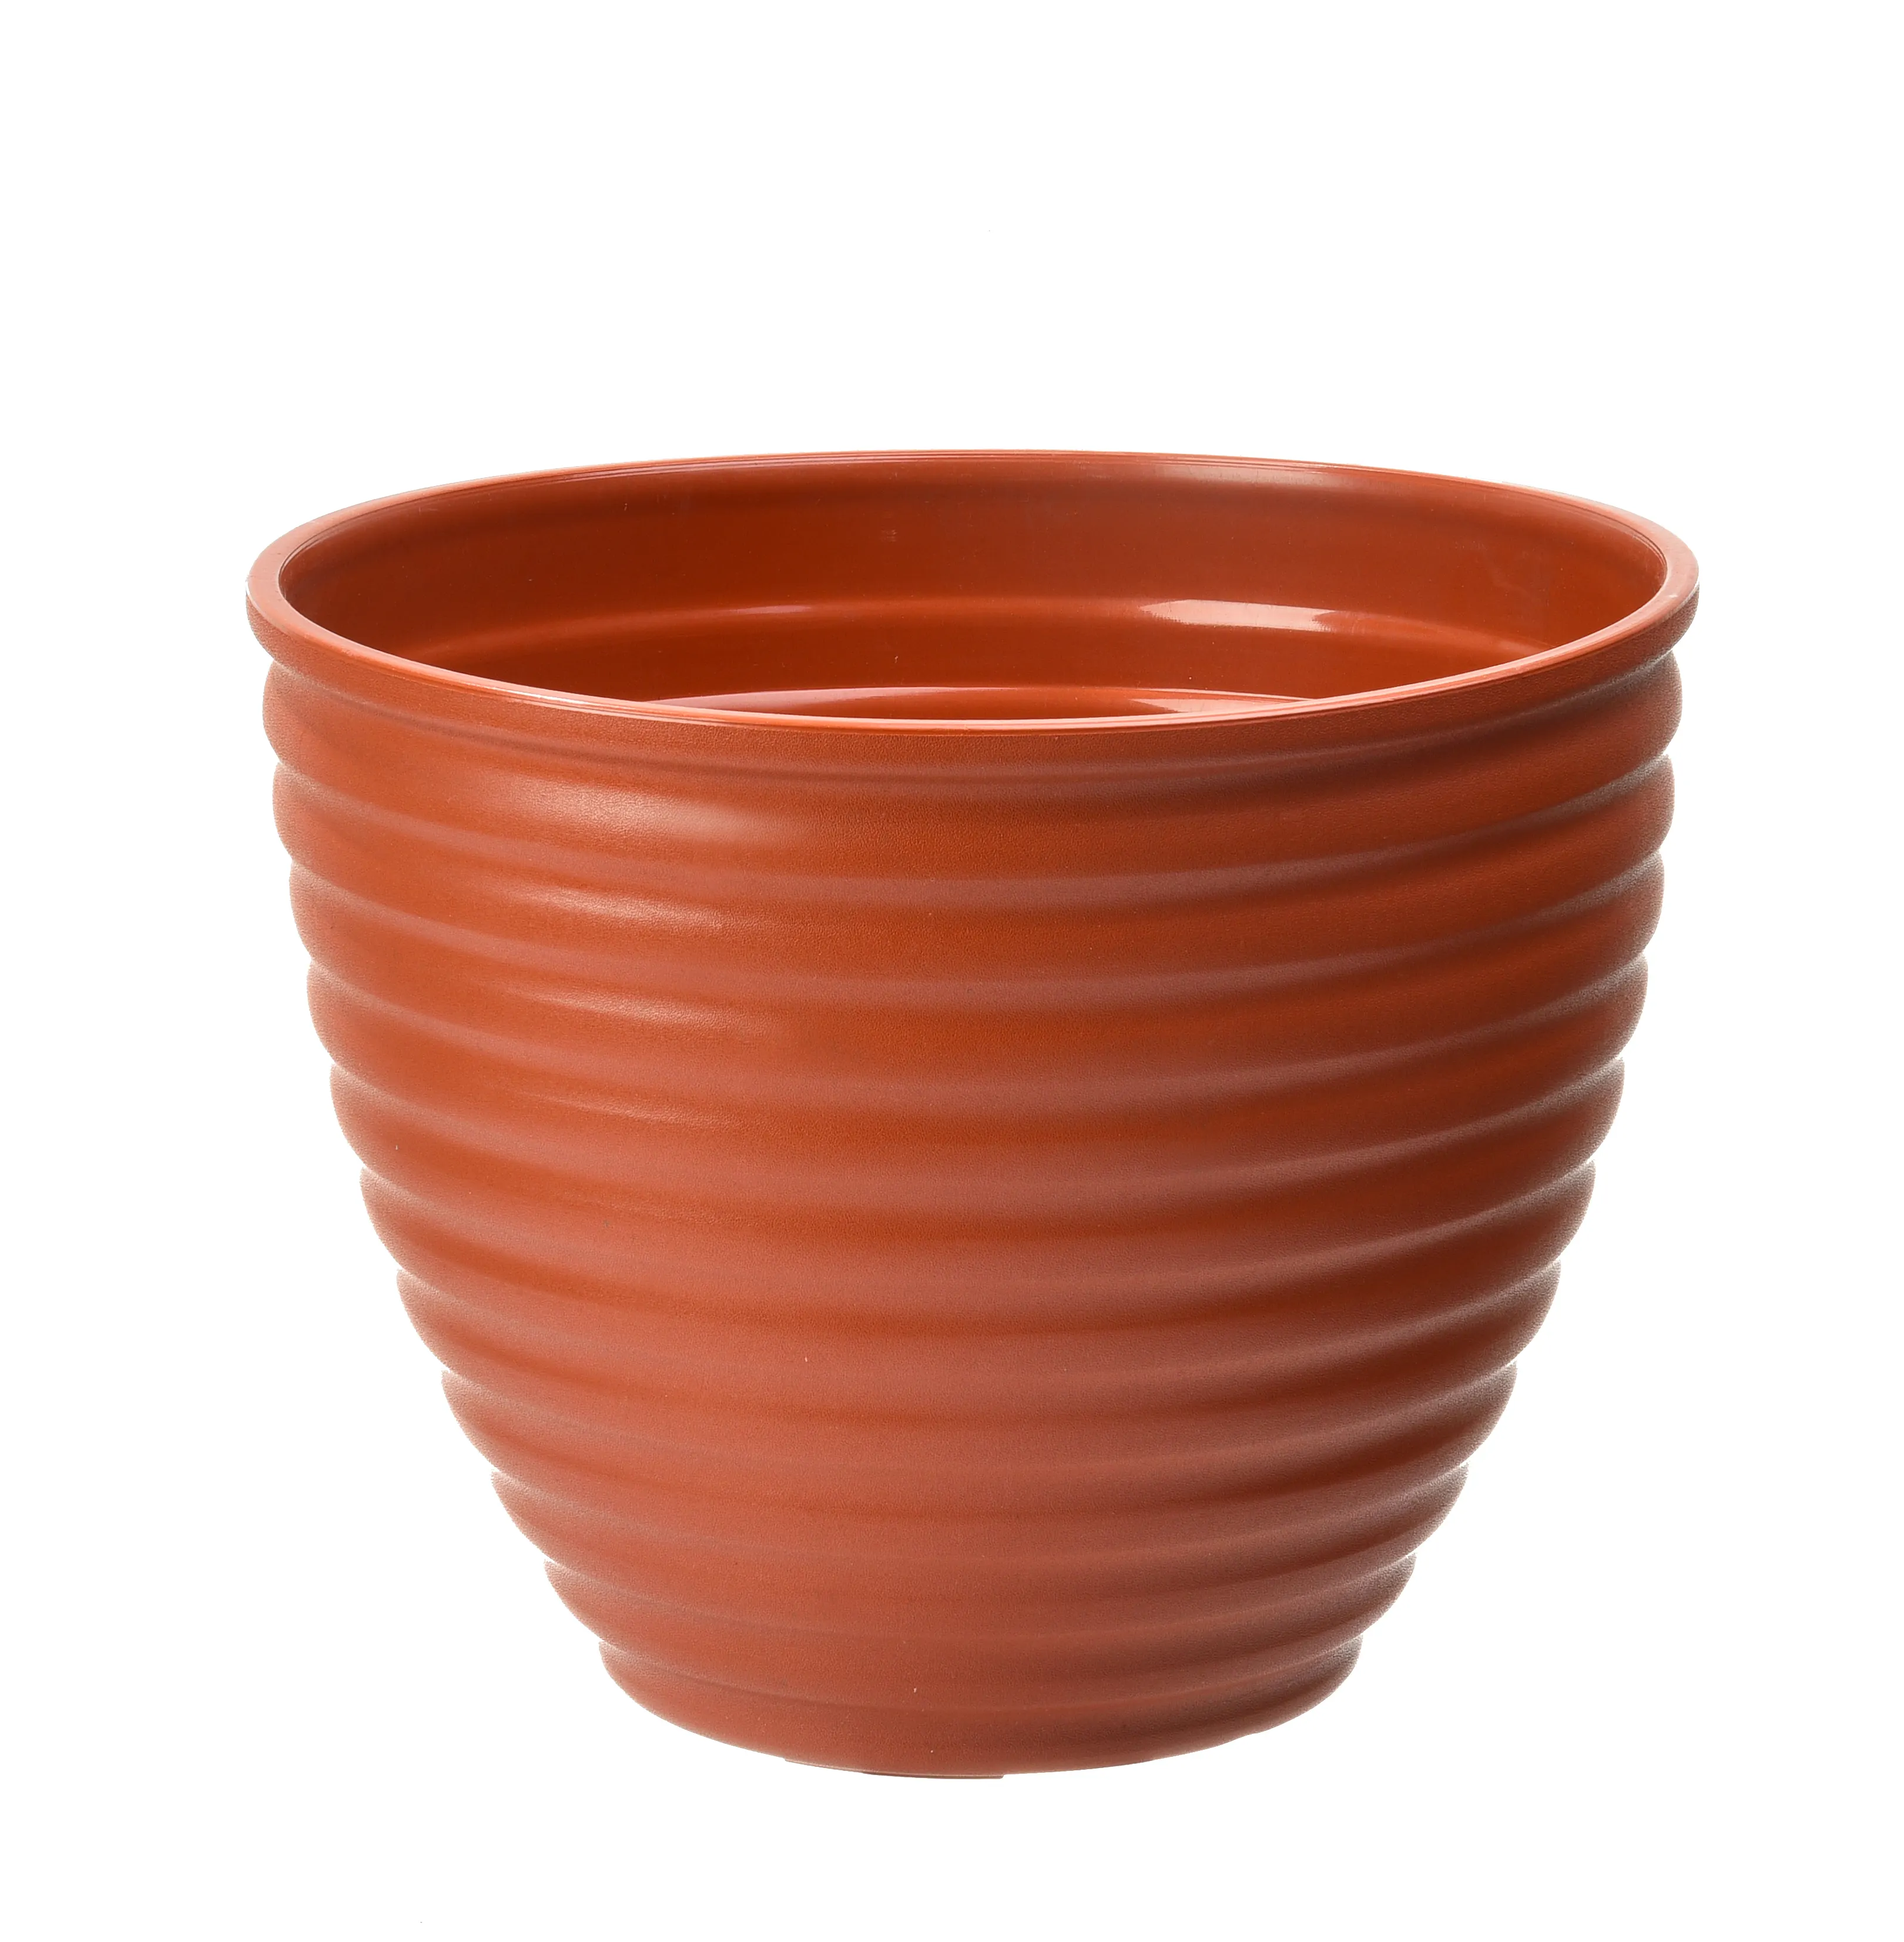 plastic flower pots for plants nursery seedling pots outdoor planters box planter garden product